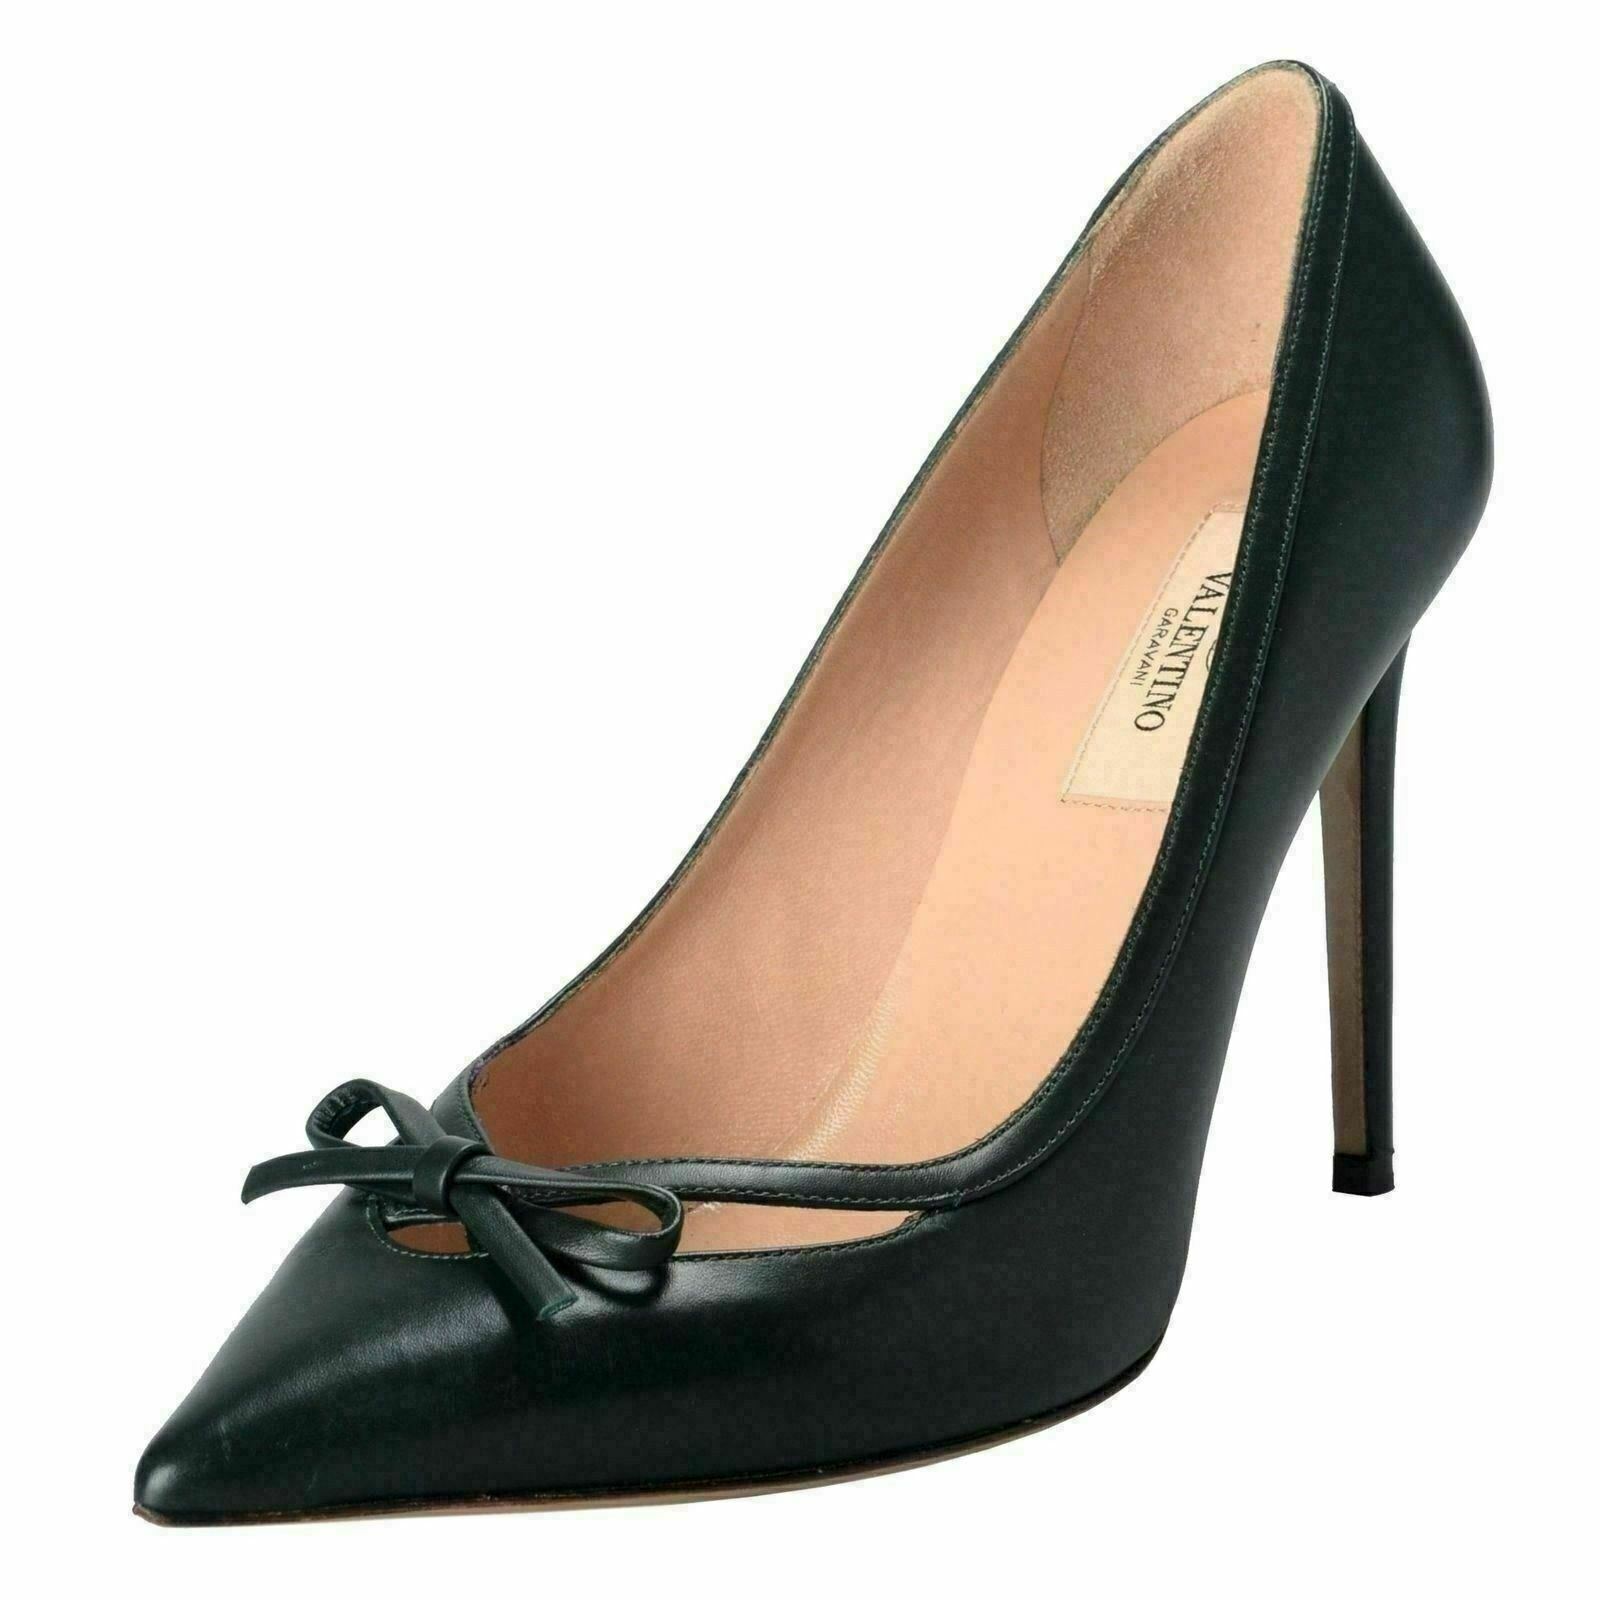 Valentino Garavani Women's Leather Dark Green High Heels Pumps Shoes US 8 IT 39